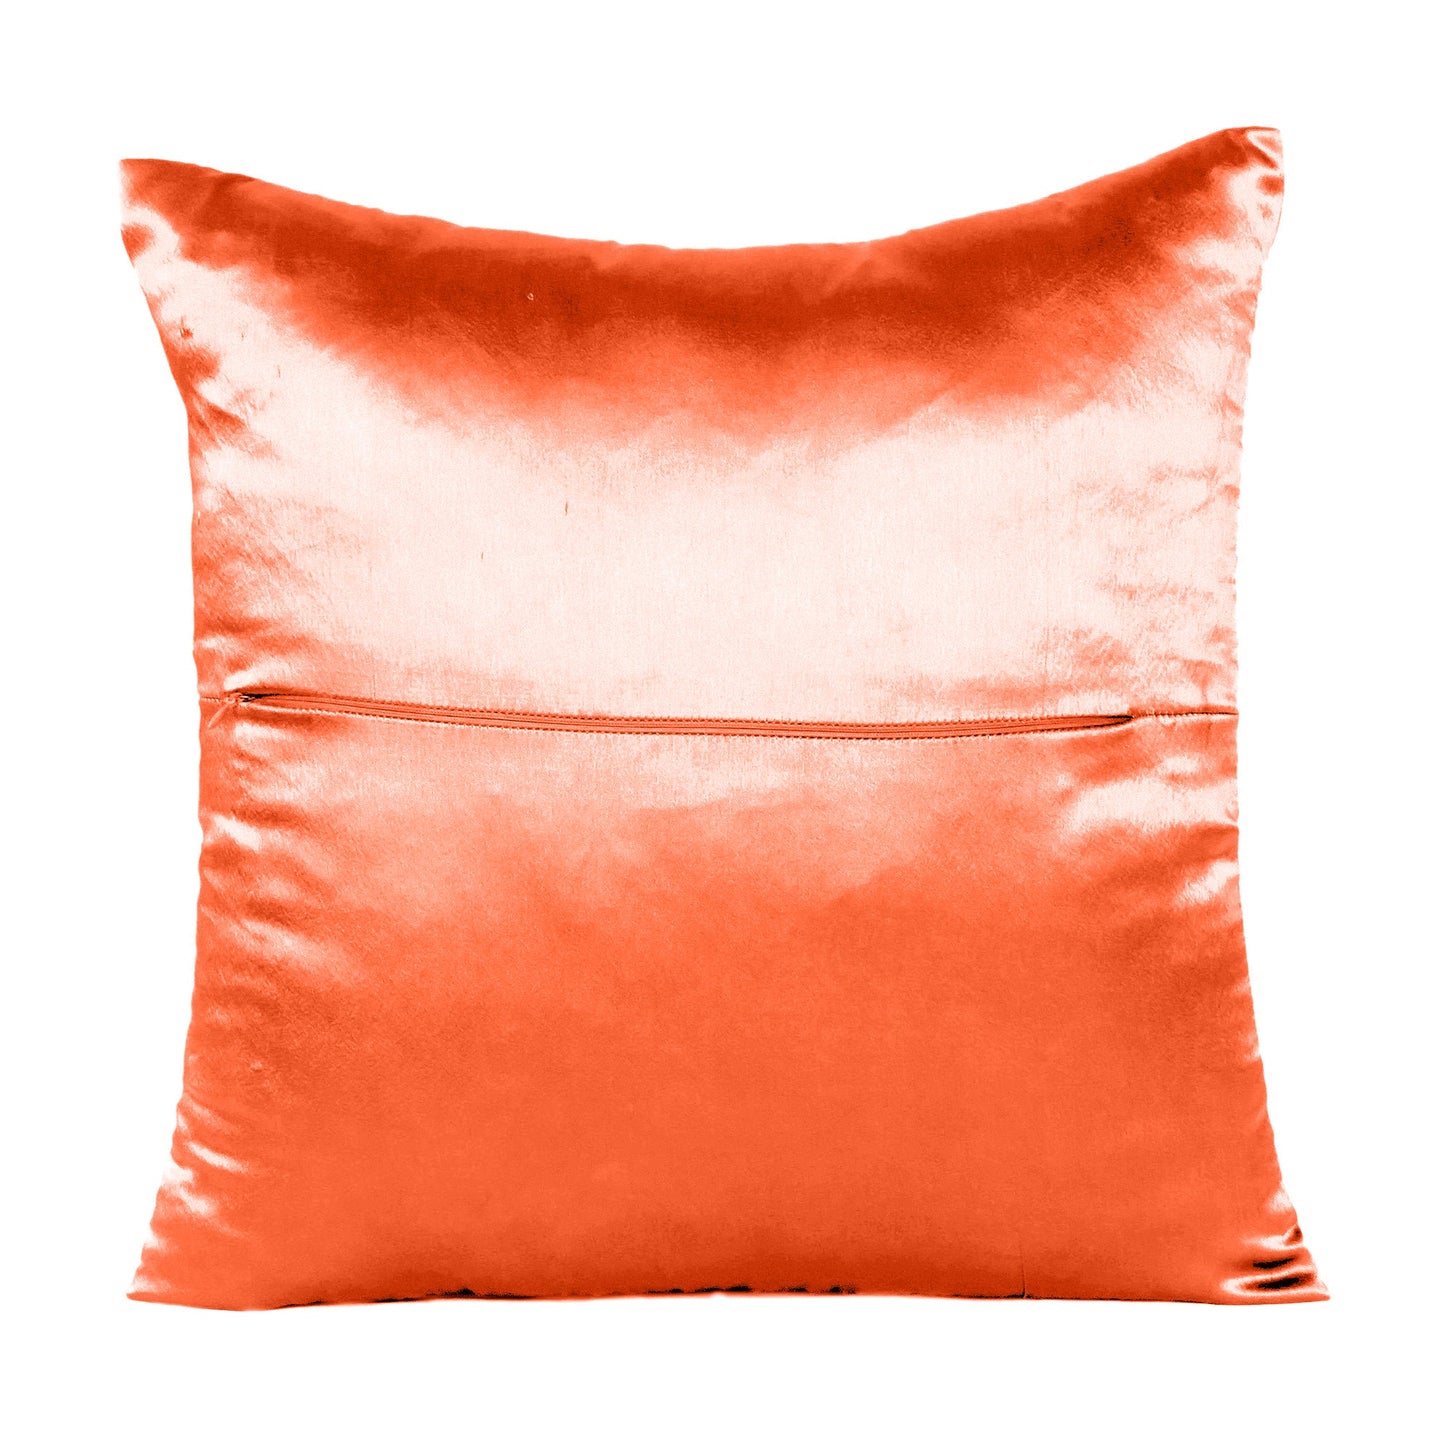 Luxury Soft Plain Satin Silk Cushion Cover in Set of 2 - Golden Poppy Orange